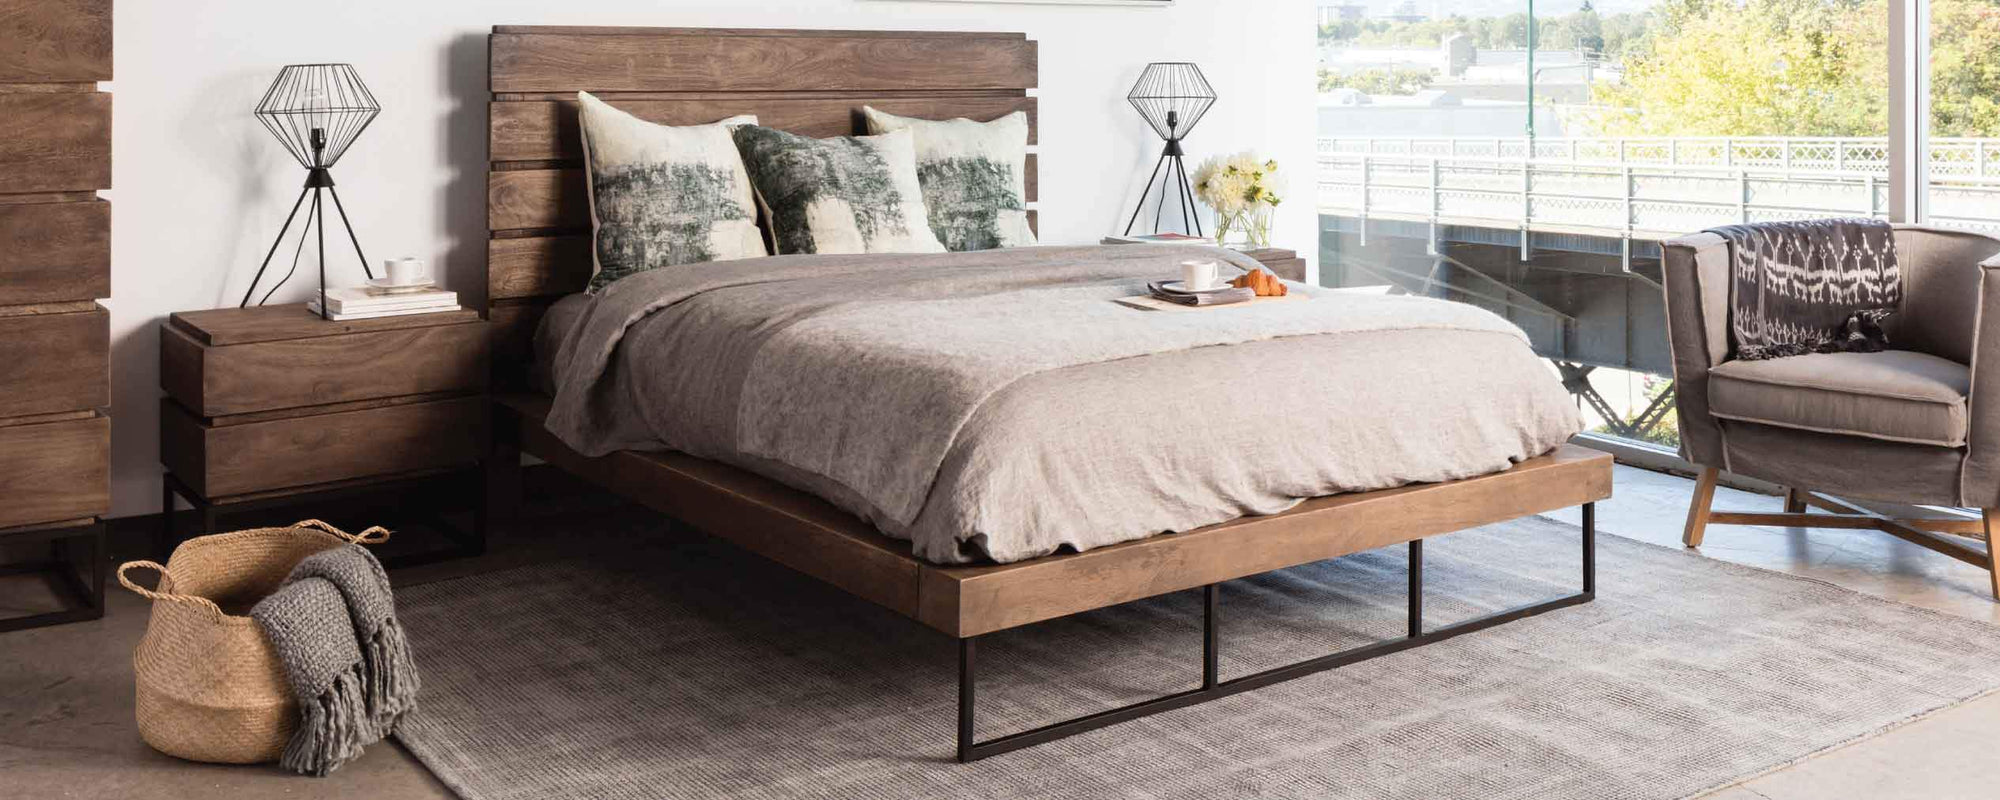 industrial bedroom furniture sydney